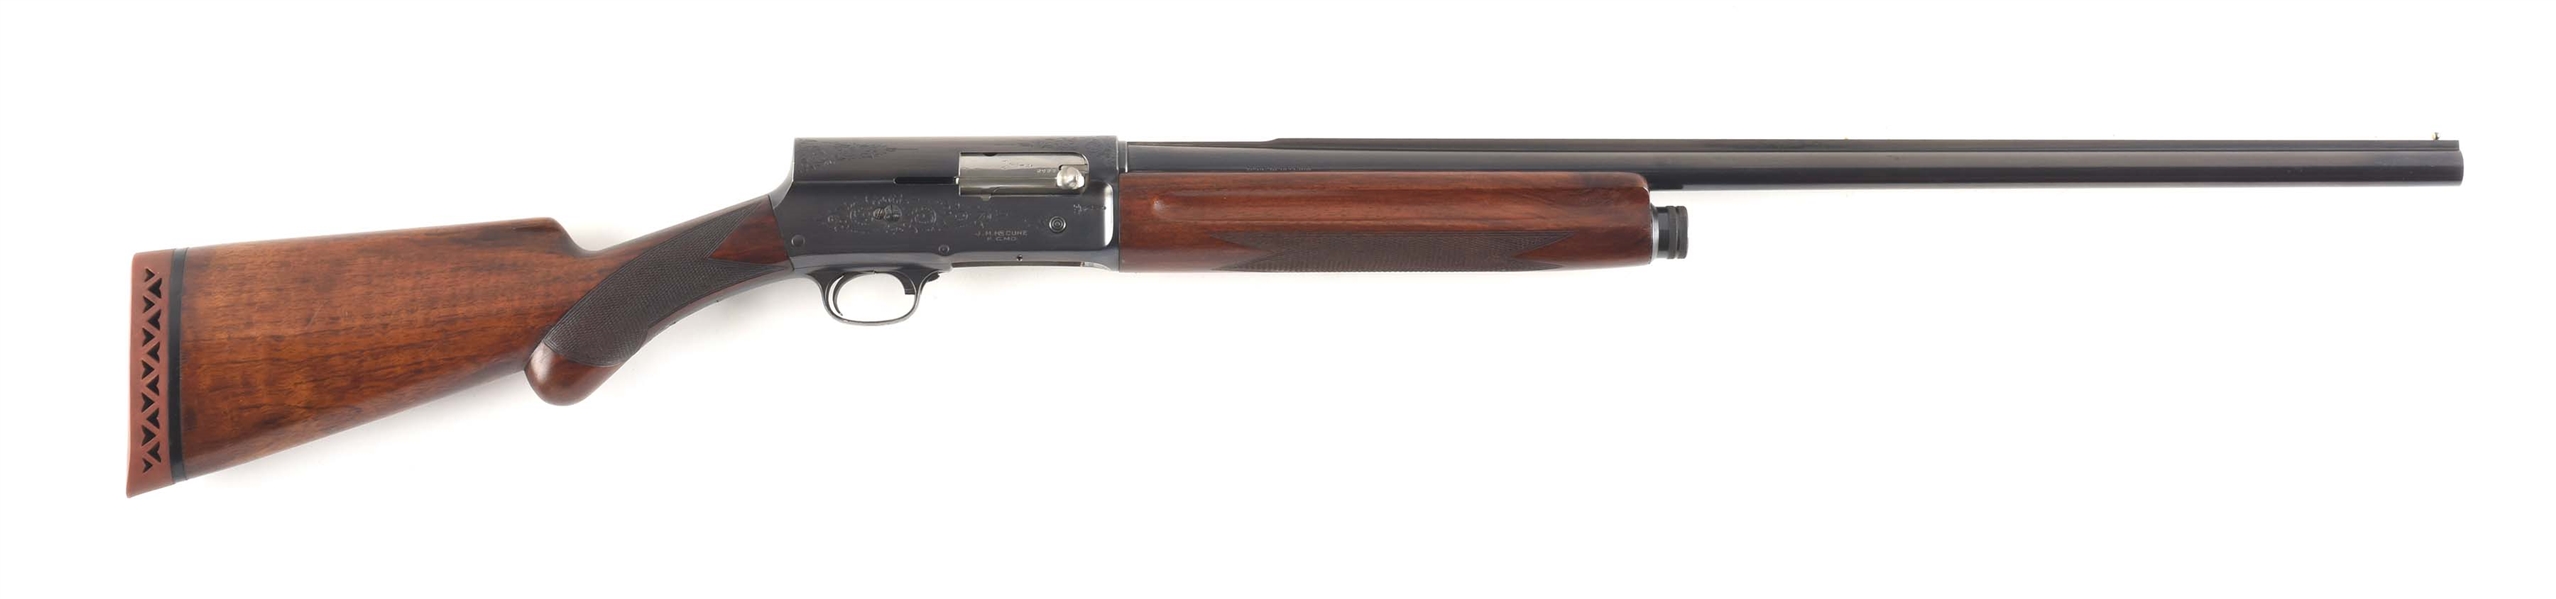 (C) PRE-WAR FN BROWNING SWEET 16 SEMI-AUTOMATIC SHOTGUN (1930).